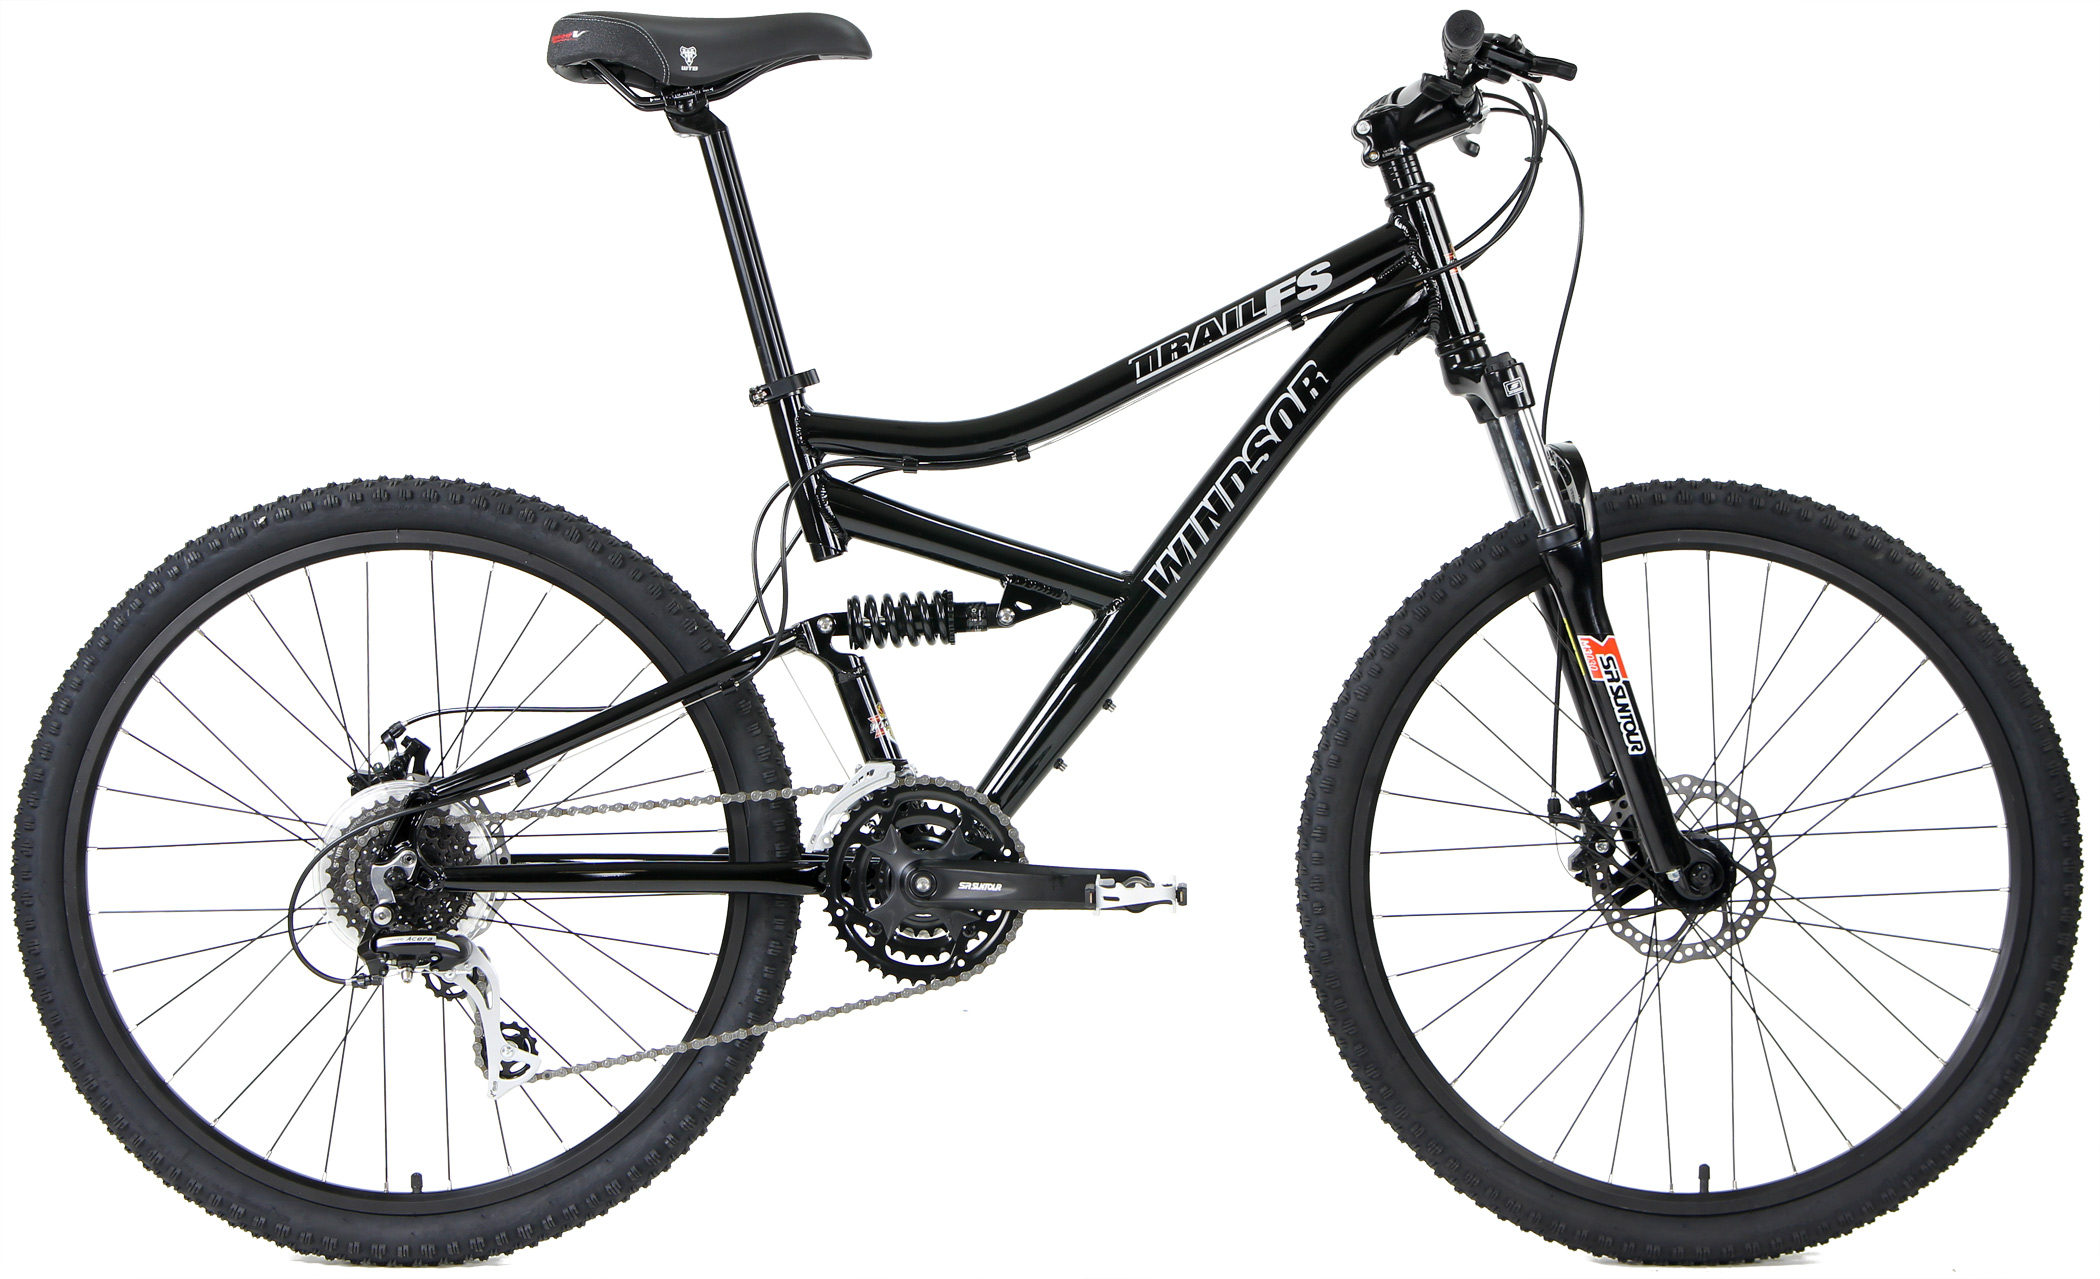 $400 mountain bike